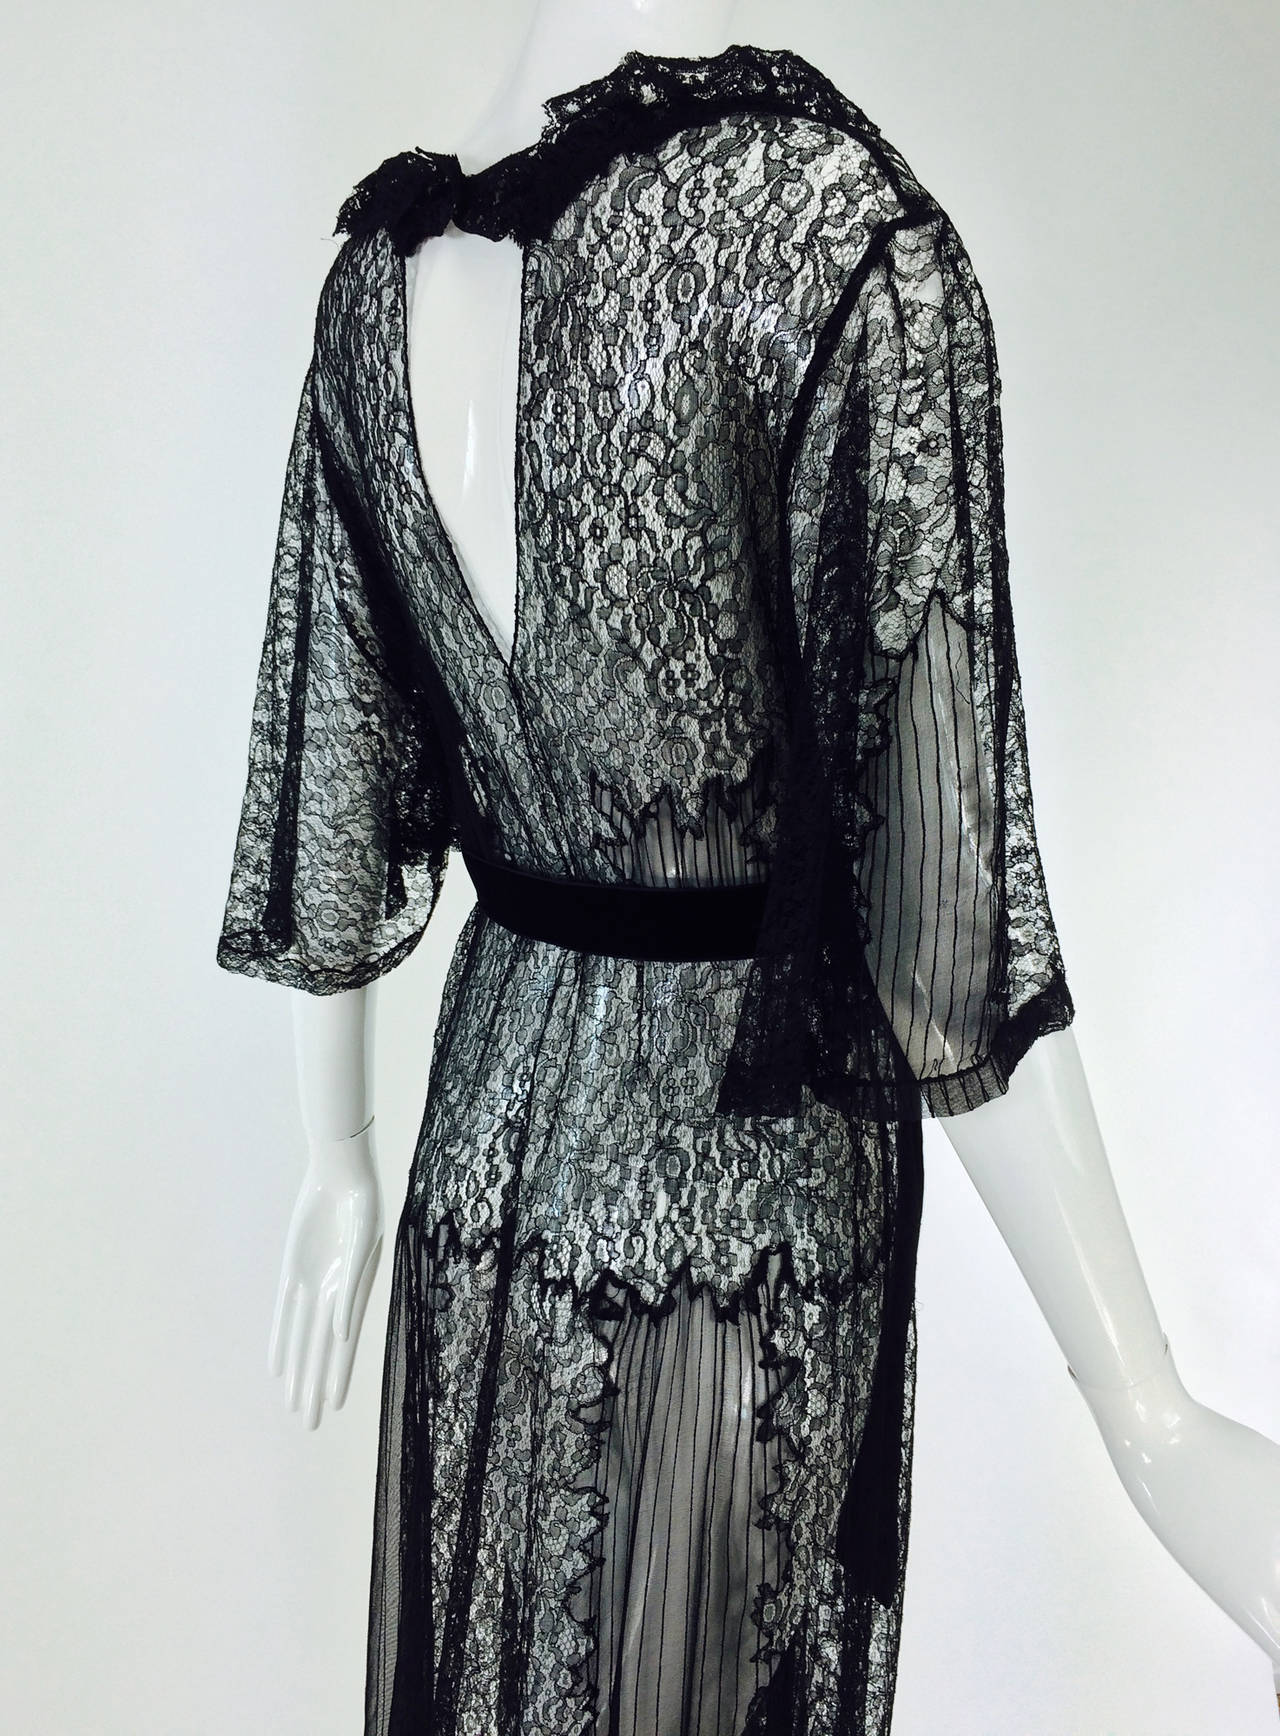 Black lace & chiffon dress from the 1940s 1